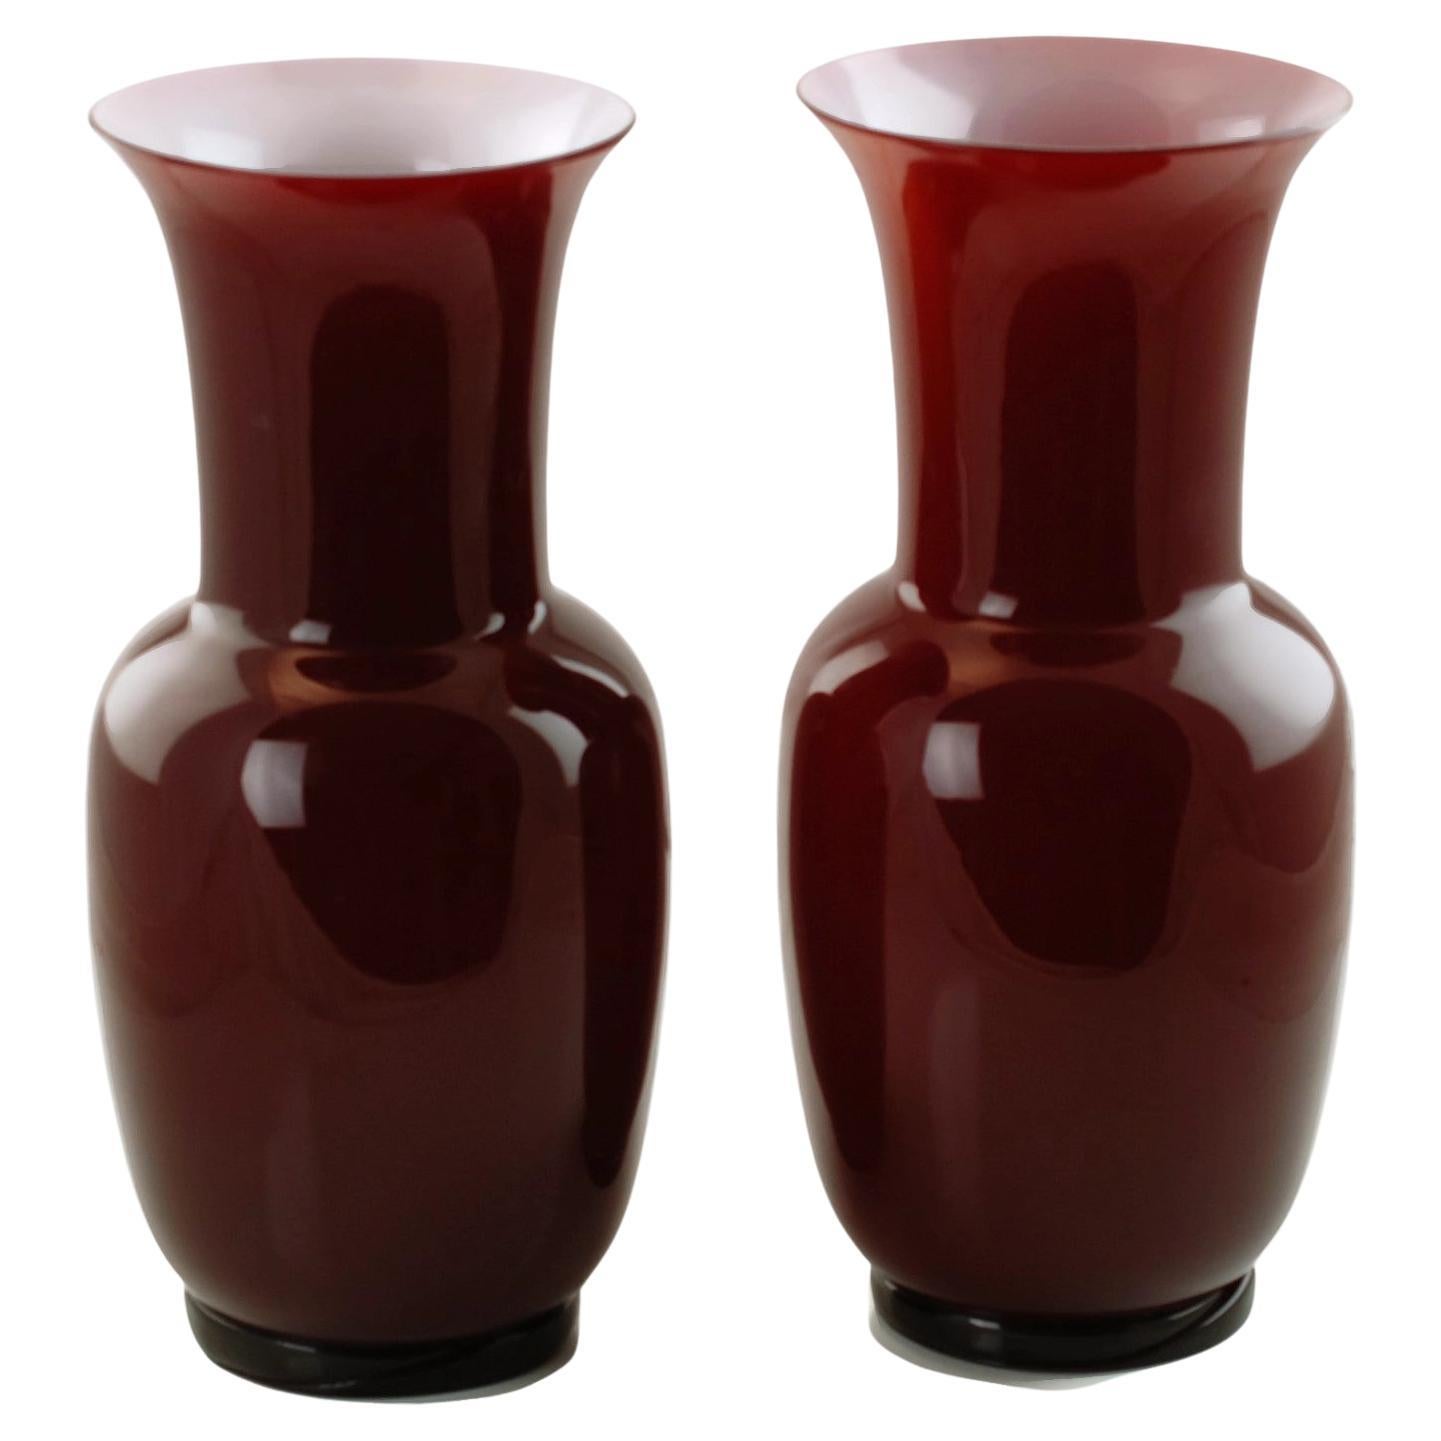 Late 20th Century Pair of Venini Opalino Oxblood Lattimo Vases